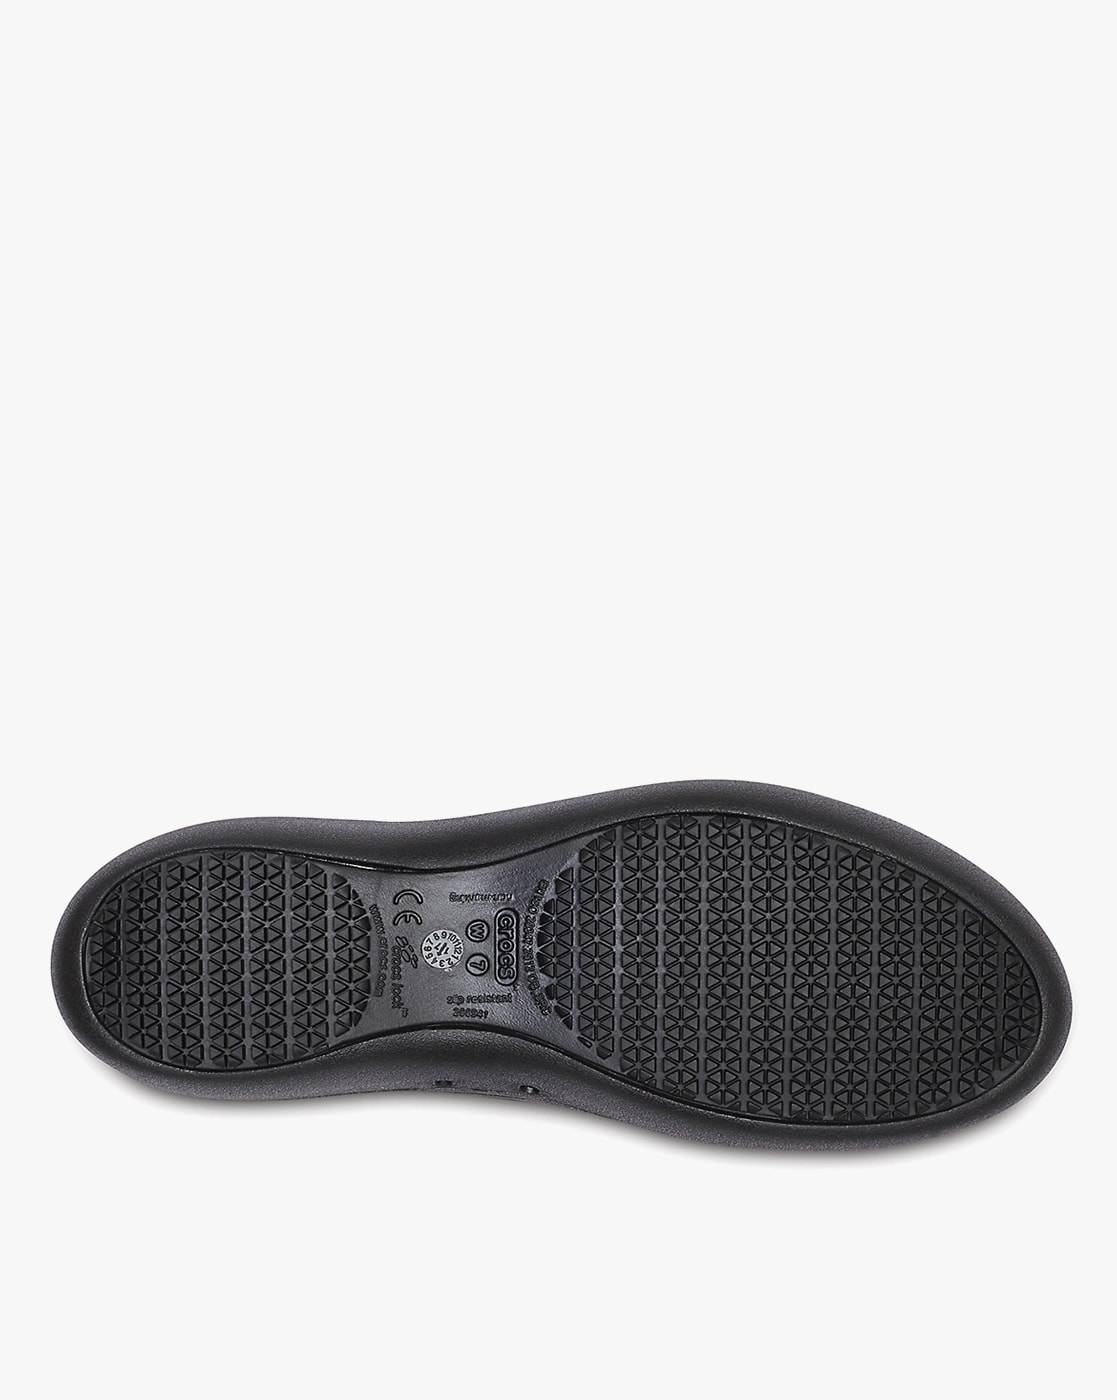 Buy Crocs Men's LiteRide Pacer M Black/Pepper/White Sneaker-3 UK (36.5 EU)  (4 US) (204967-06I) at Amazon.in